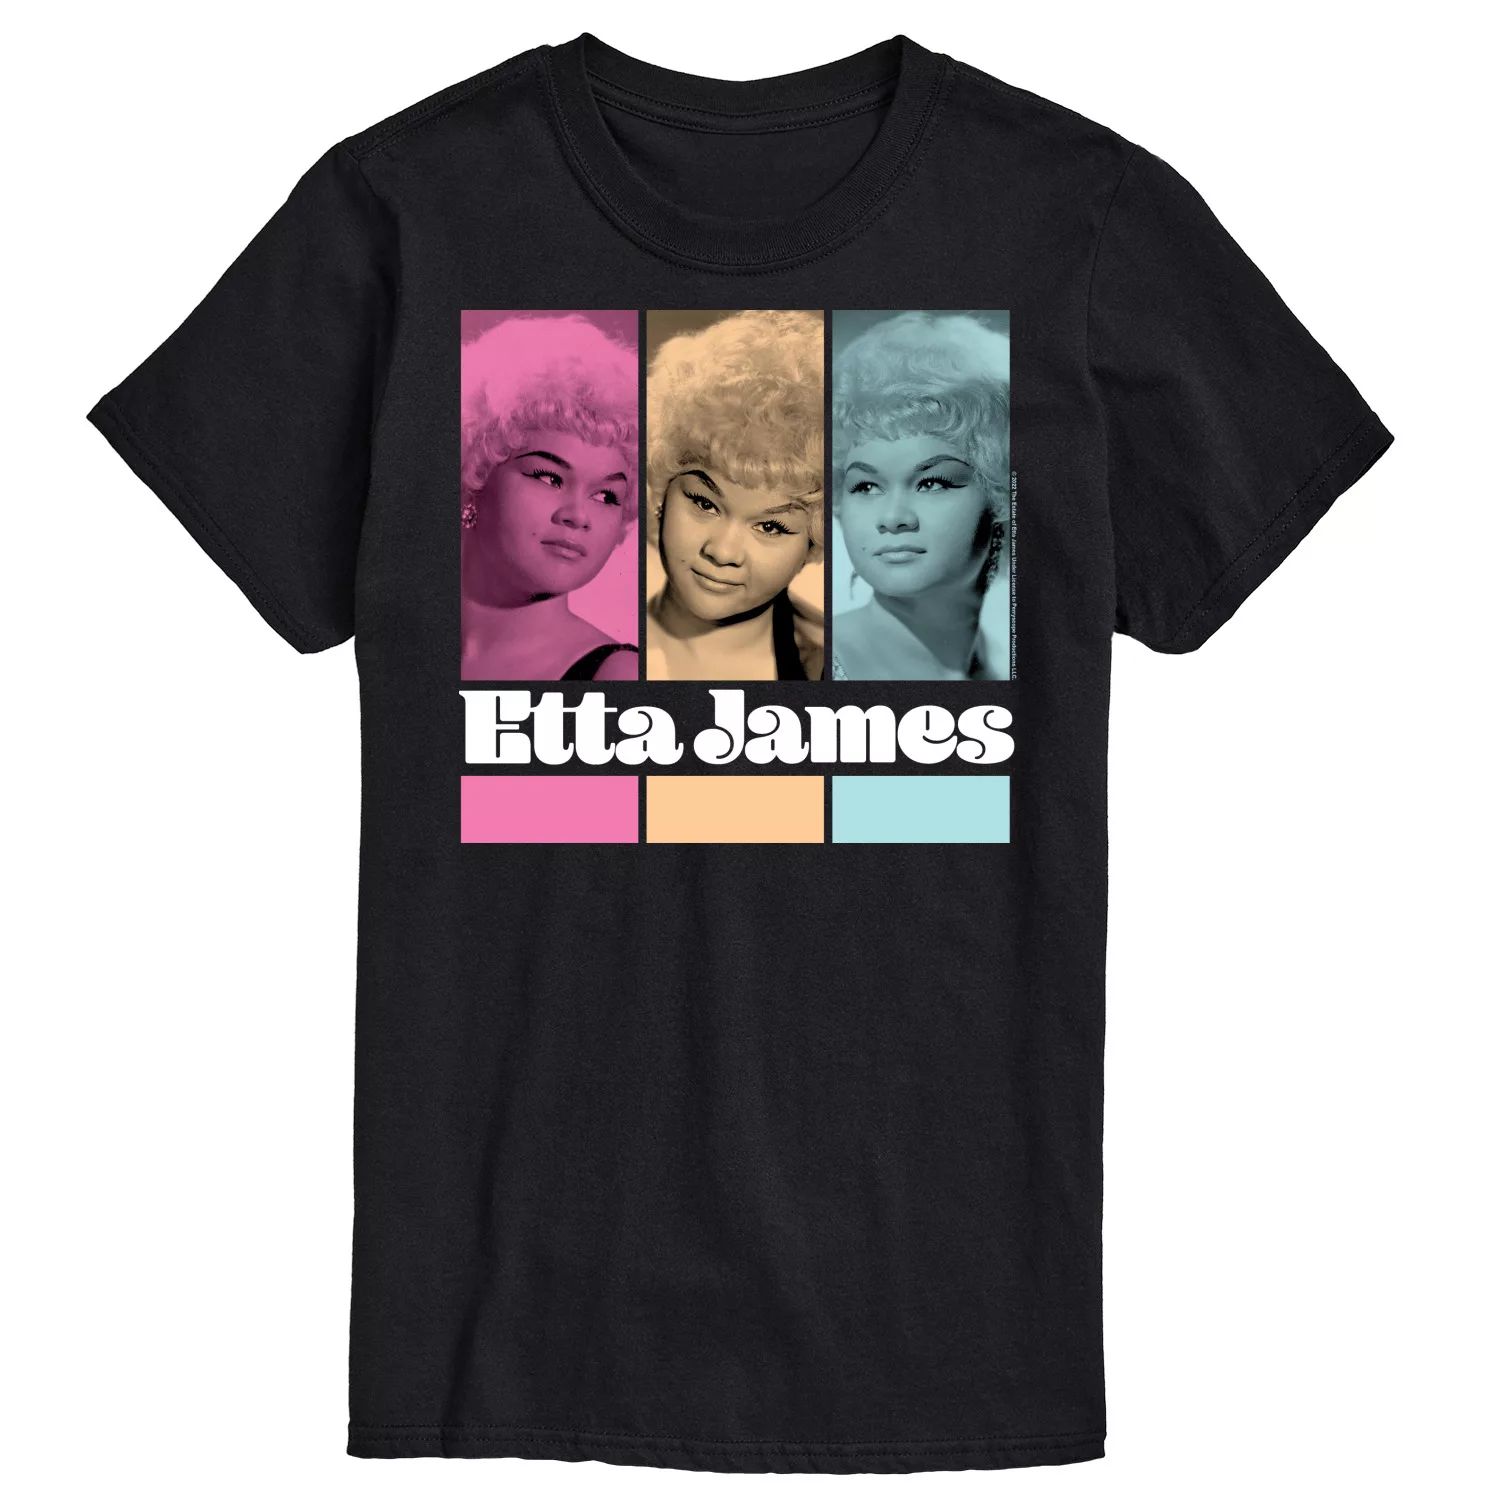 Футболка Big & Tall Etta James с сеткой License, черный цена и фото